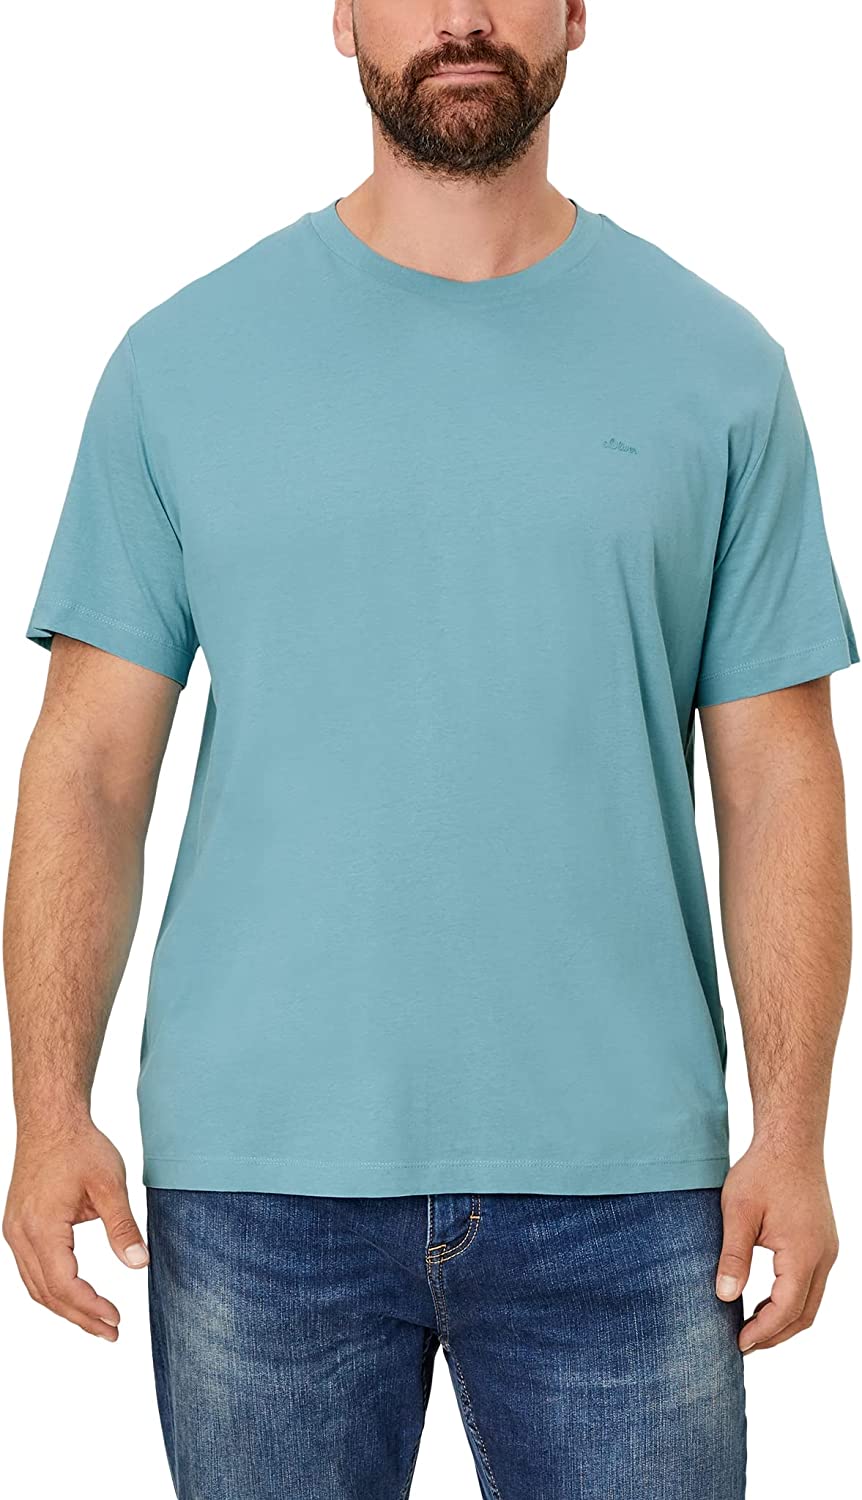 S.oliver Big Size Herren T-Shirt